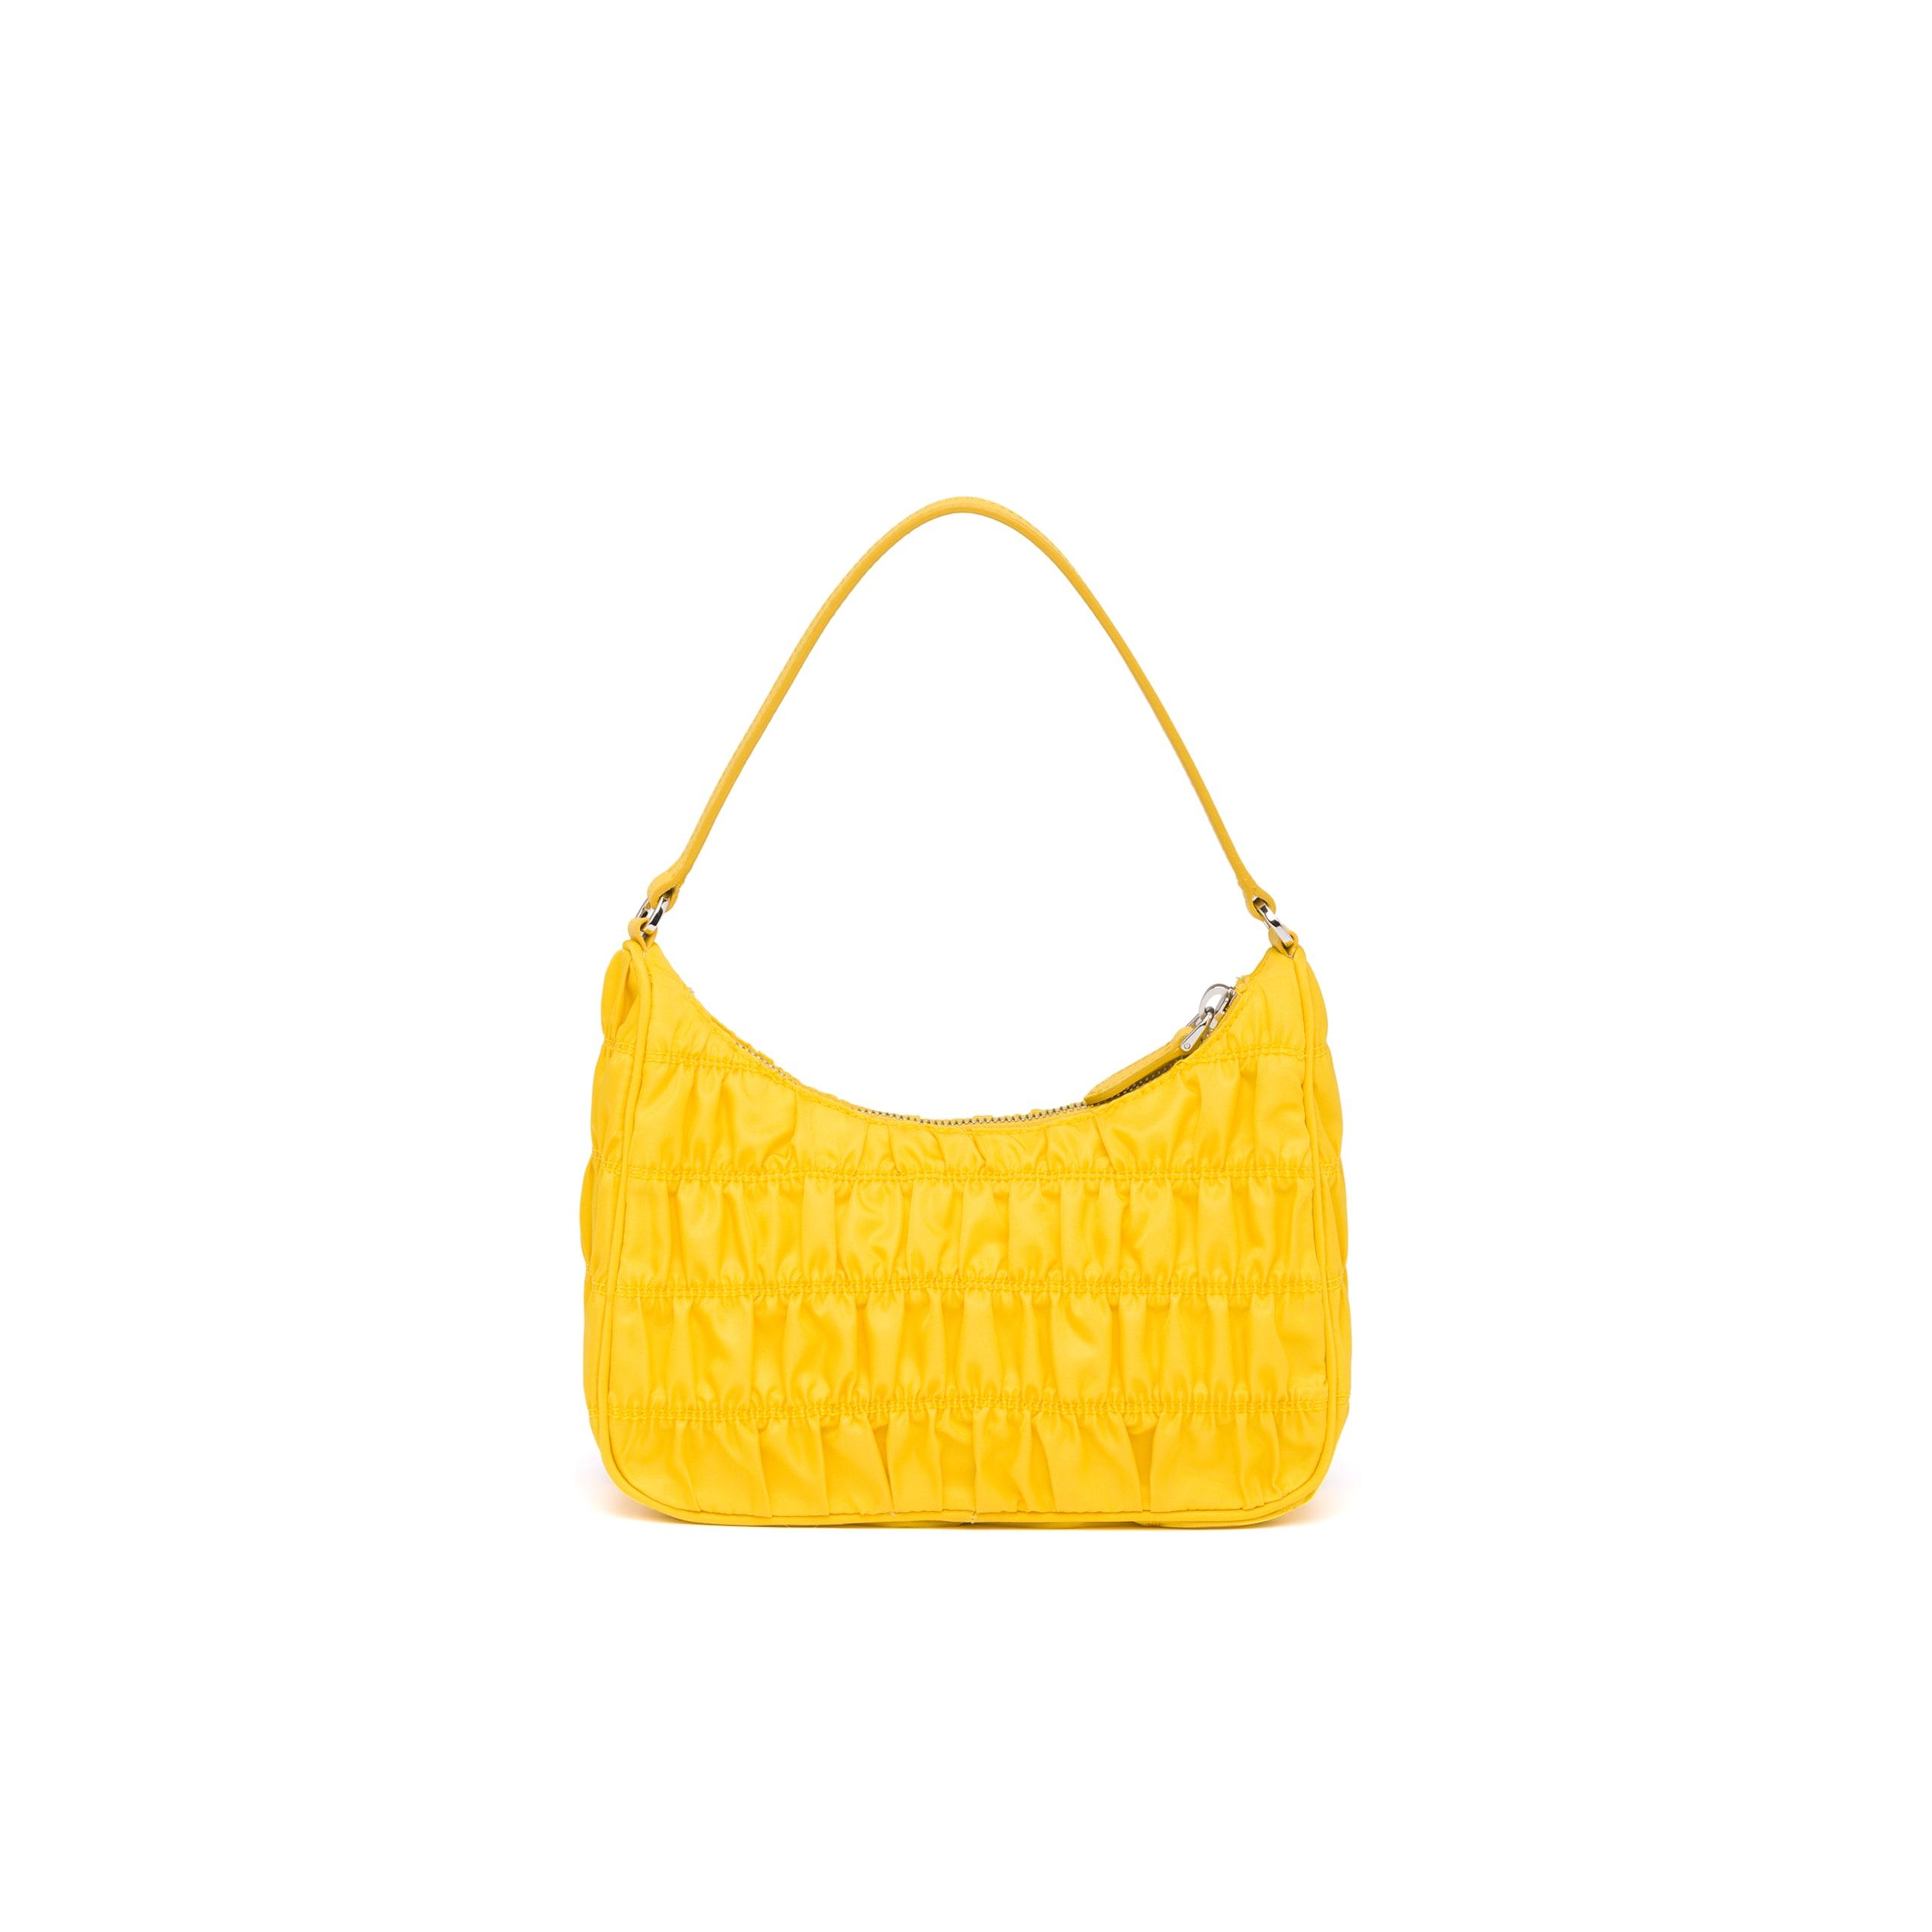 Prada Synthetic Nylon And Saffiano Leather Mini Bag in Yellow - Lyst